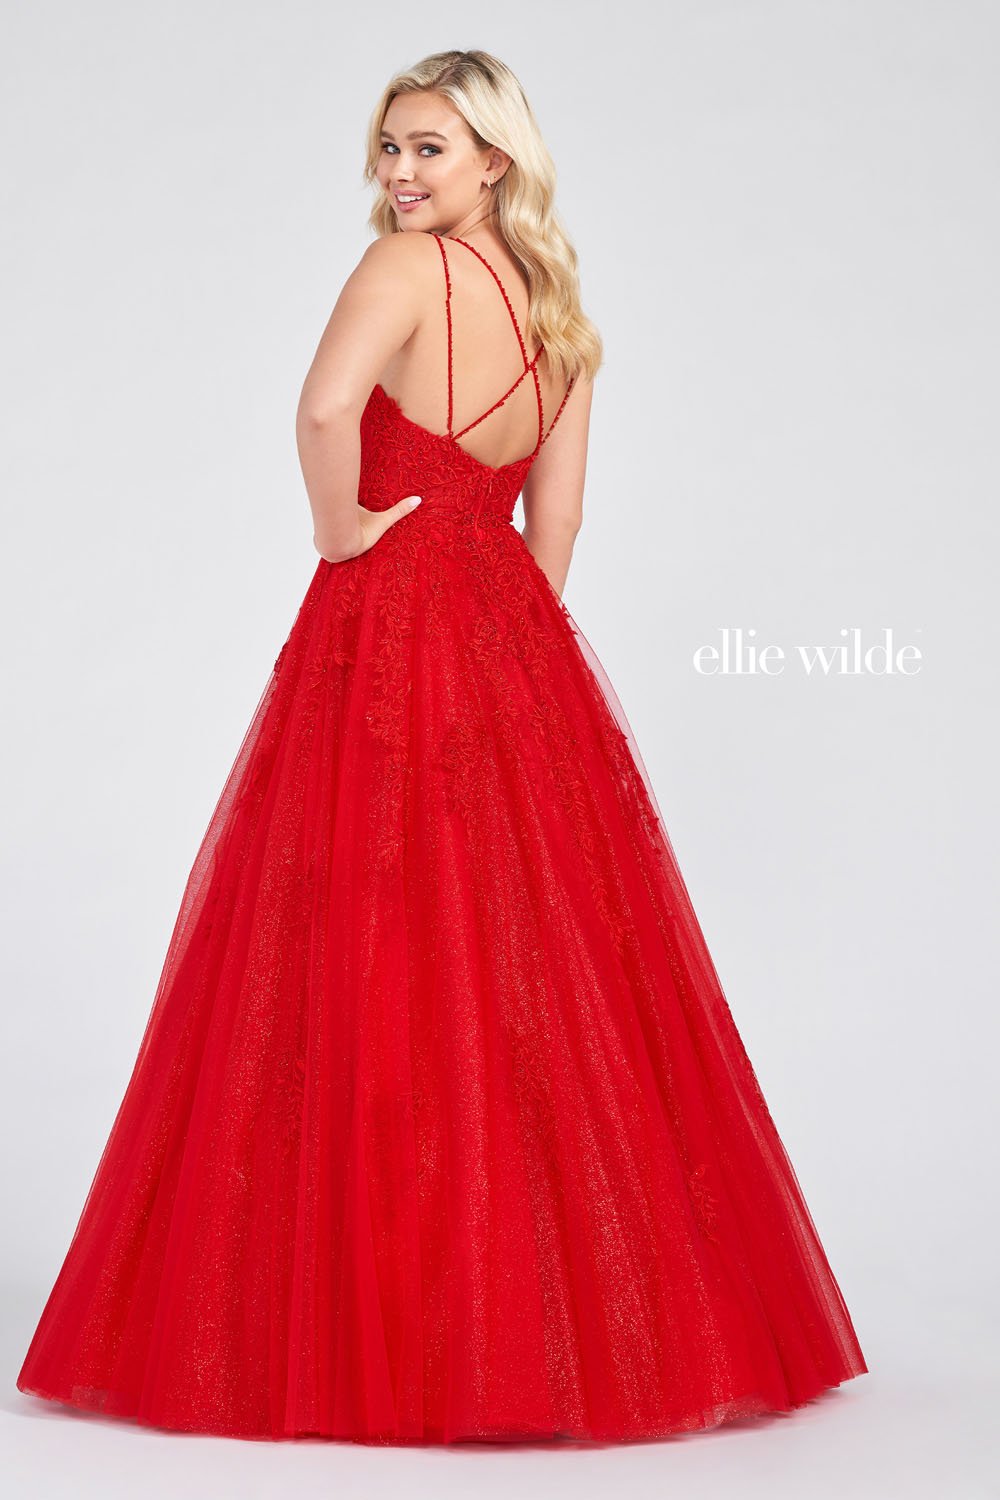 Ellie Wilde Red EW122076 Prom Dress Image.  Red formal dress.